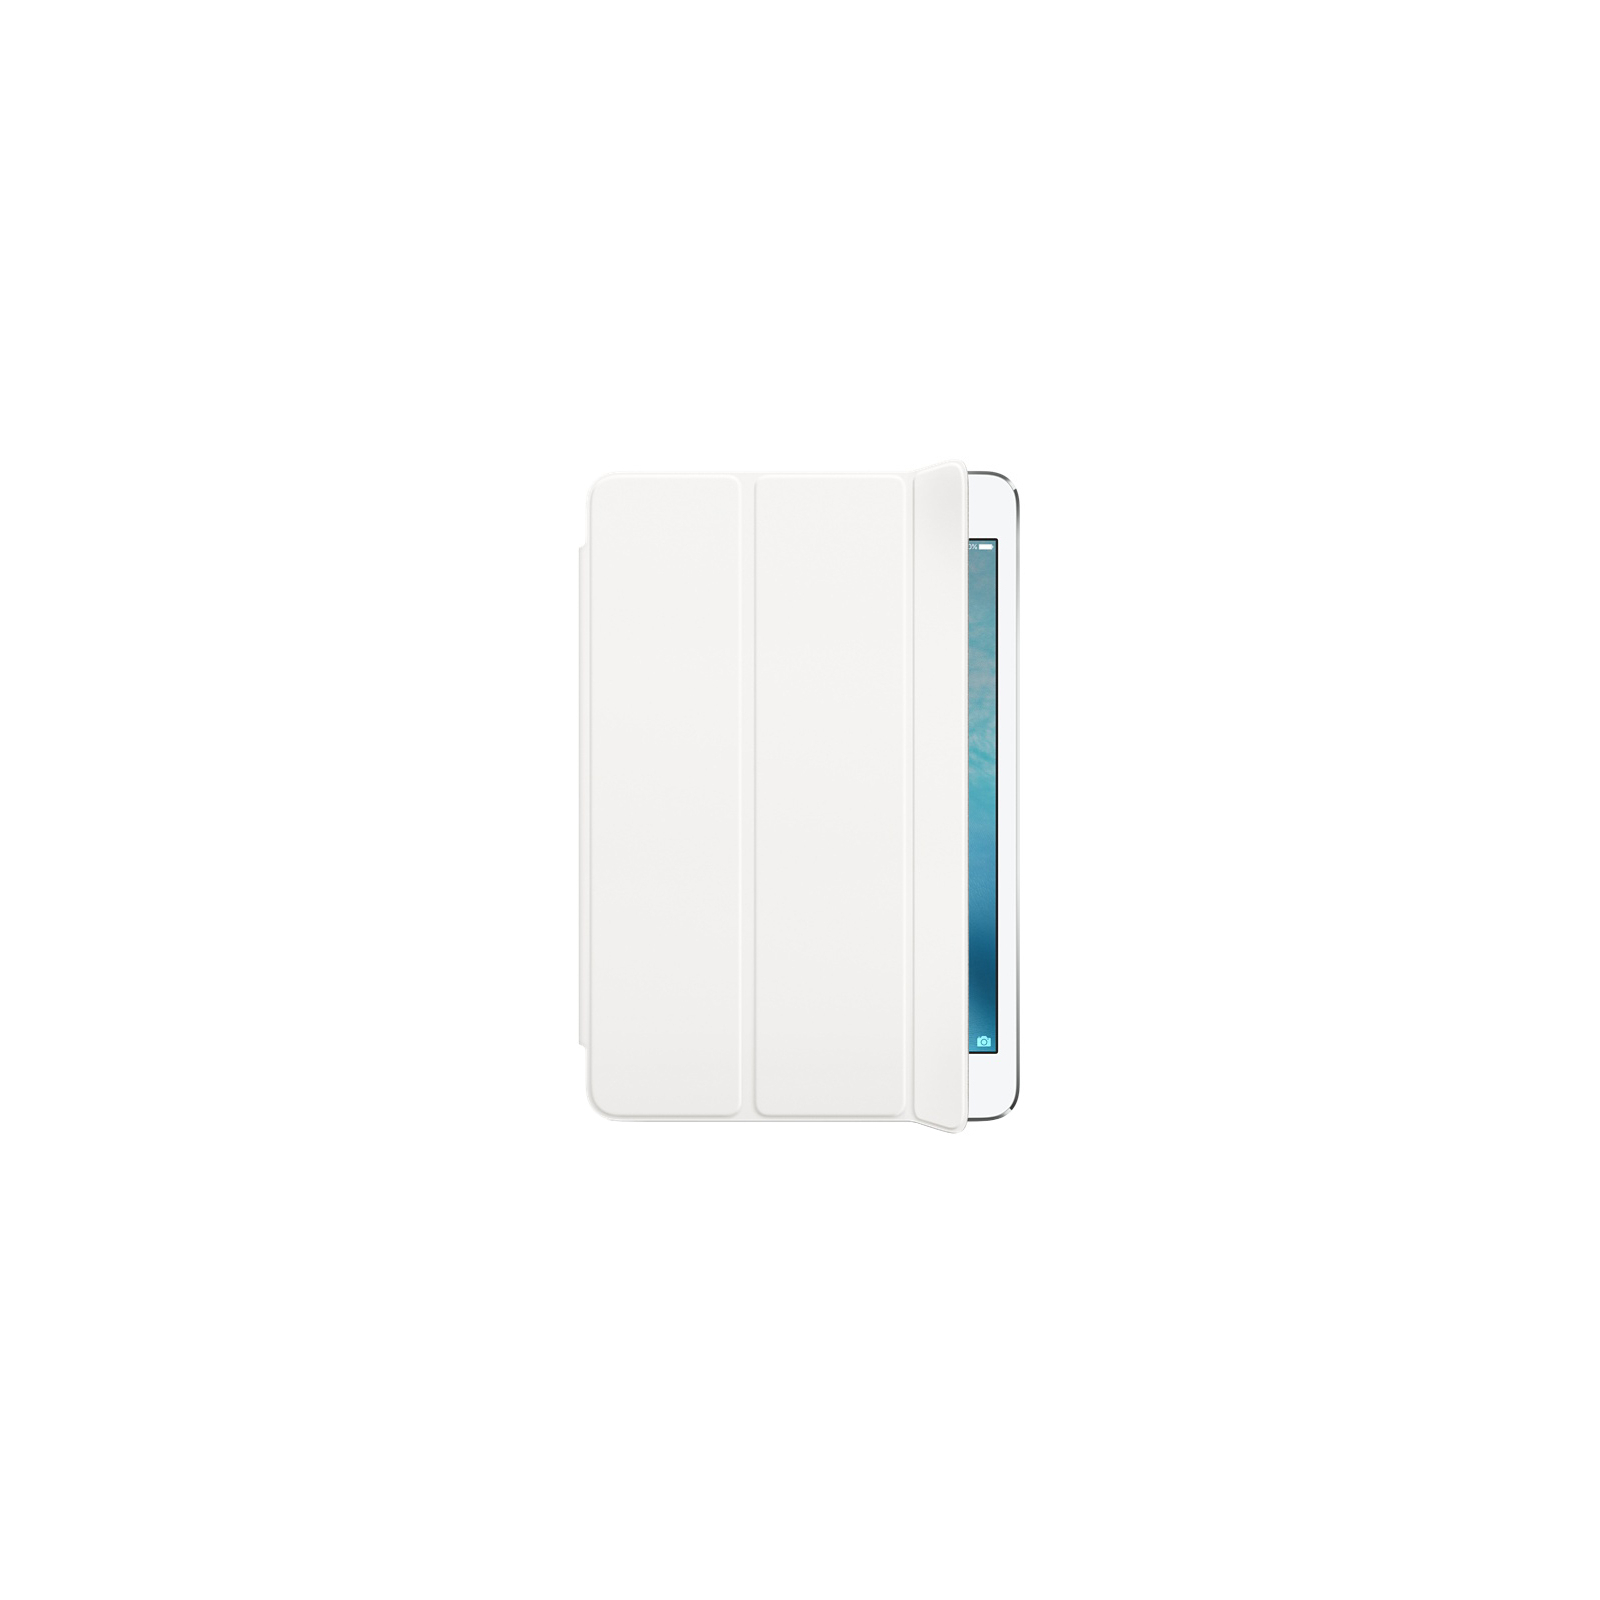 Чехол для планшета Apple Smart Cover для iPad mini 4 White (MKLW2ZM/A) изображение 2